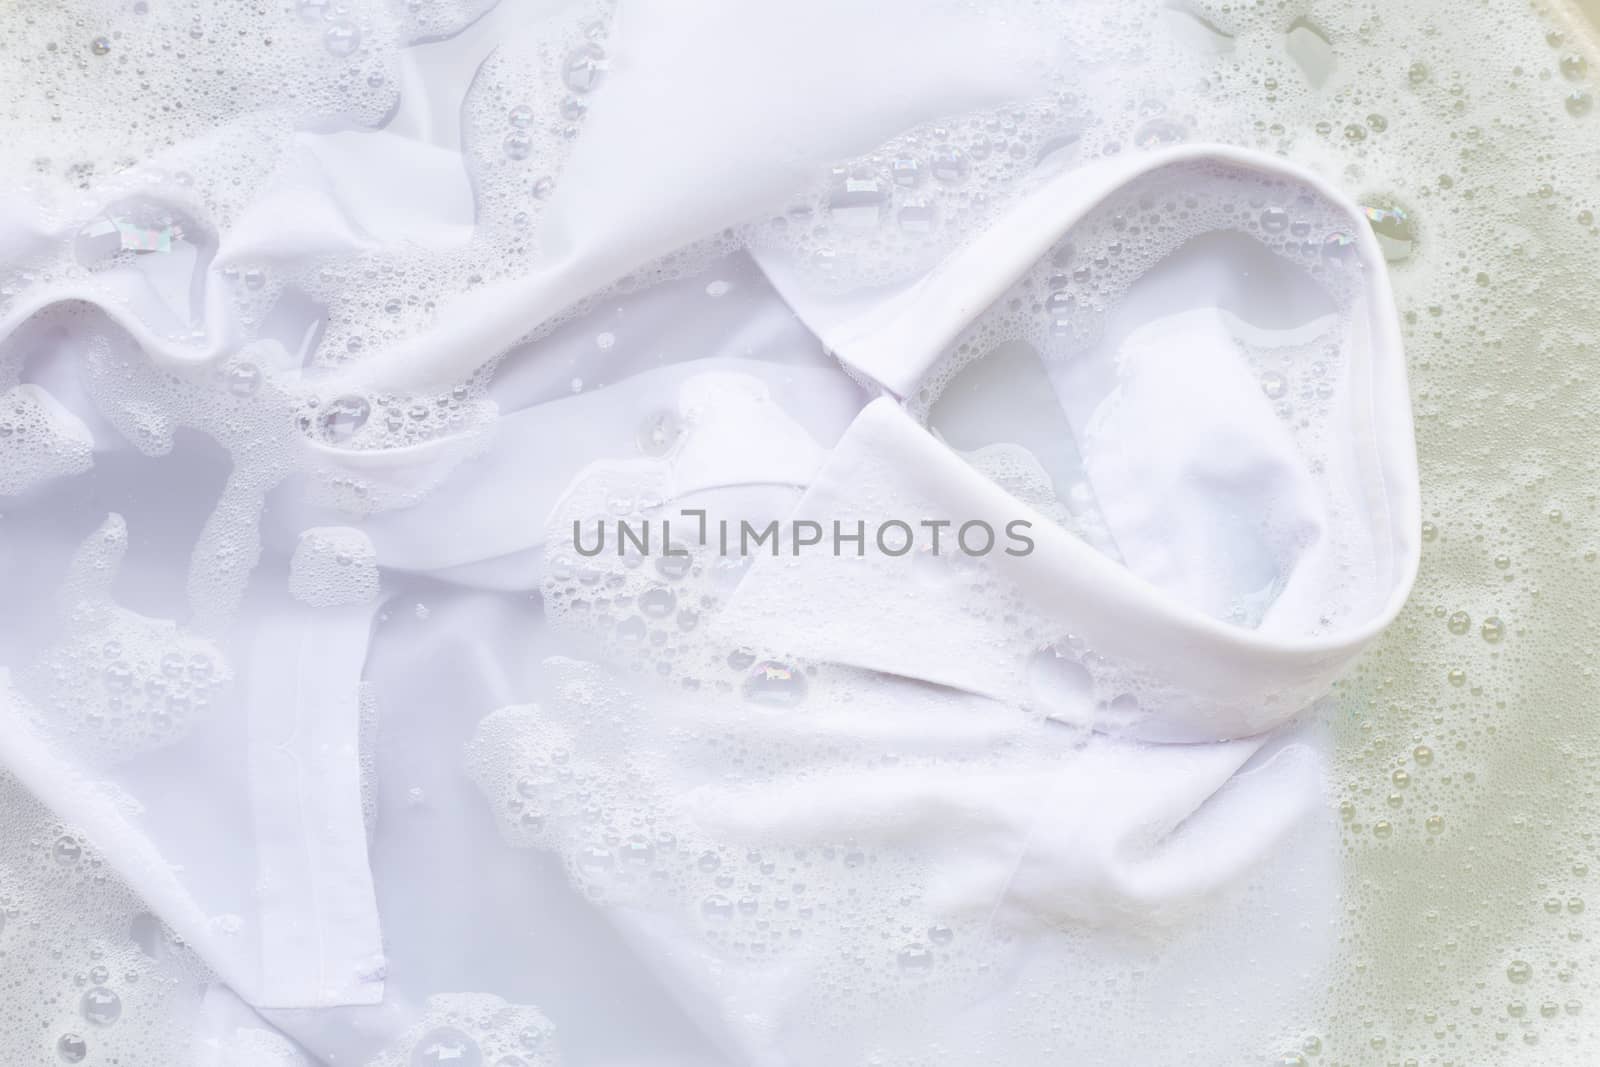 Soak a cloth before washing, white shirt